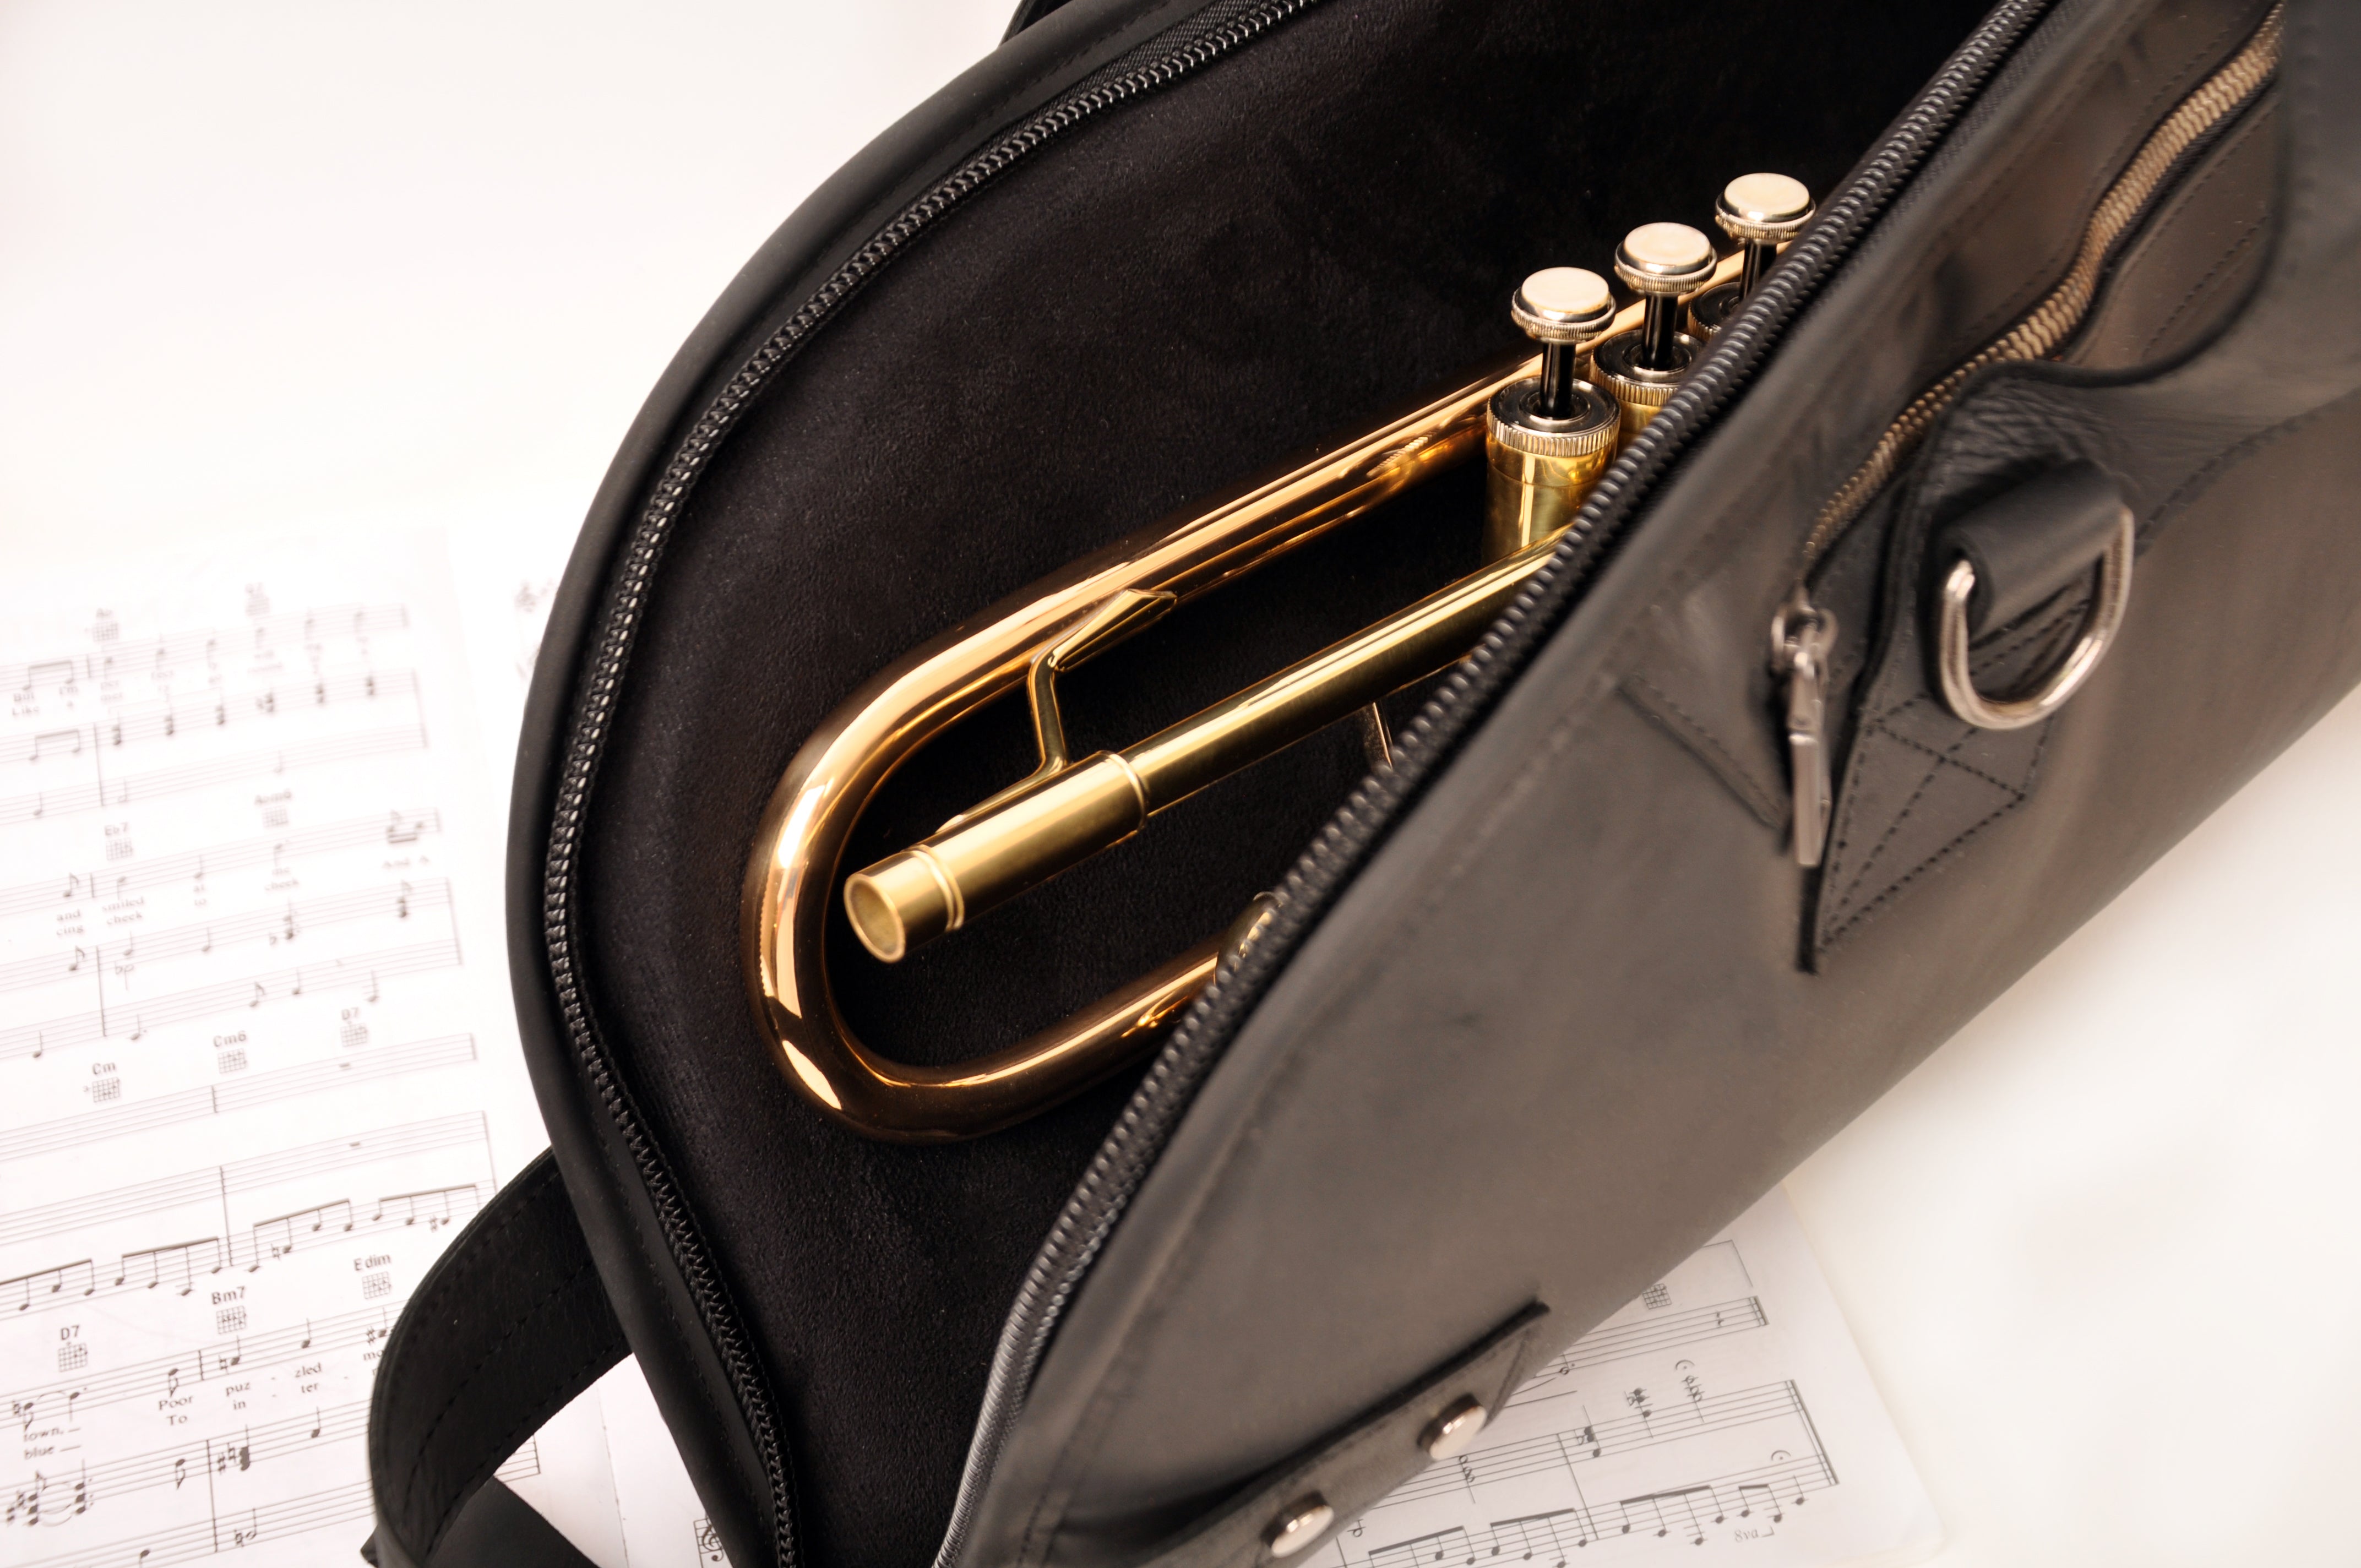 MG Leather Work - Single Trumpet Gig bag - Crazy Horse